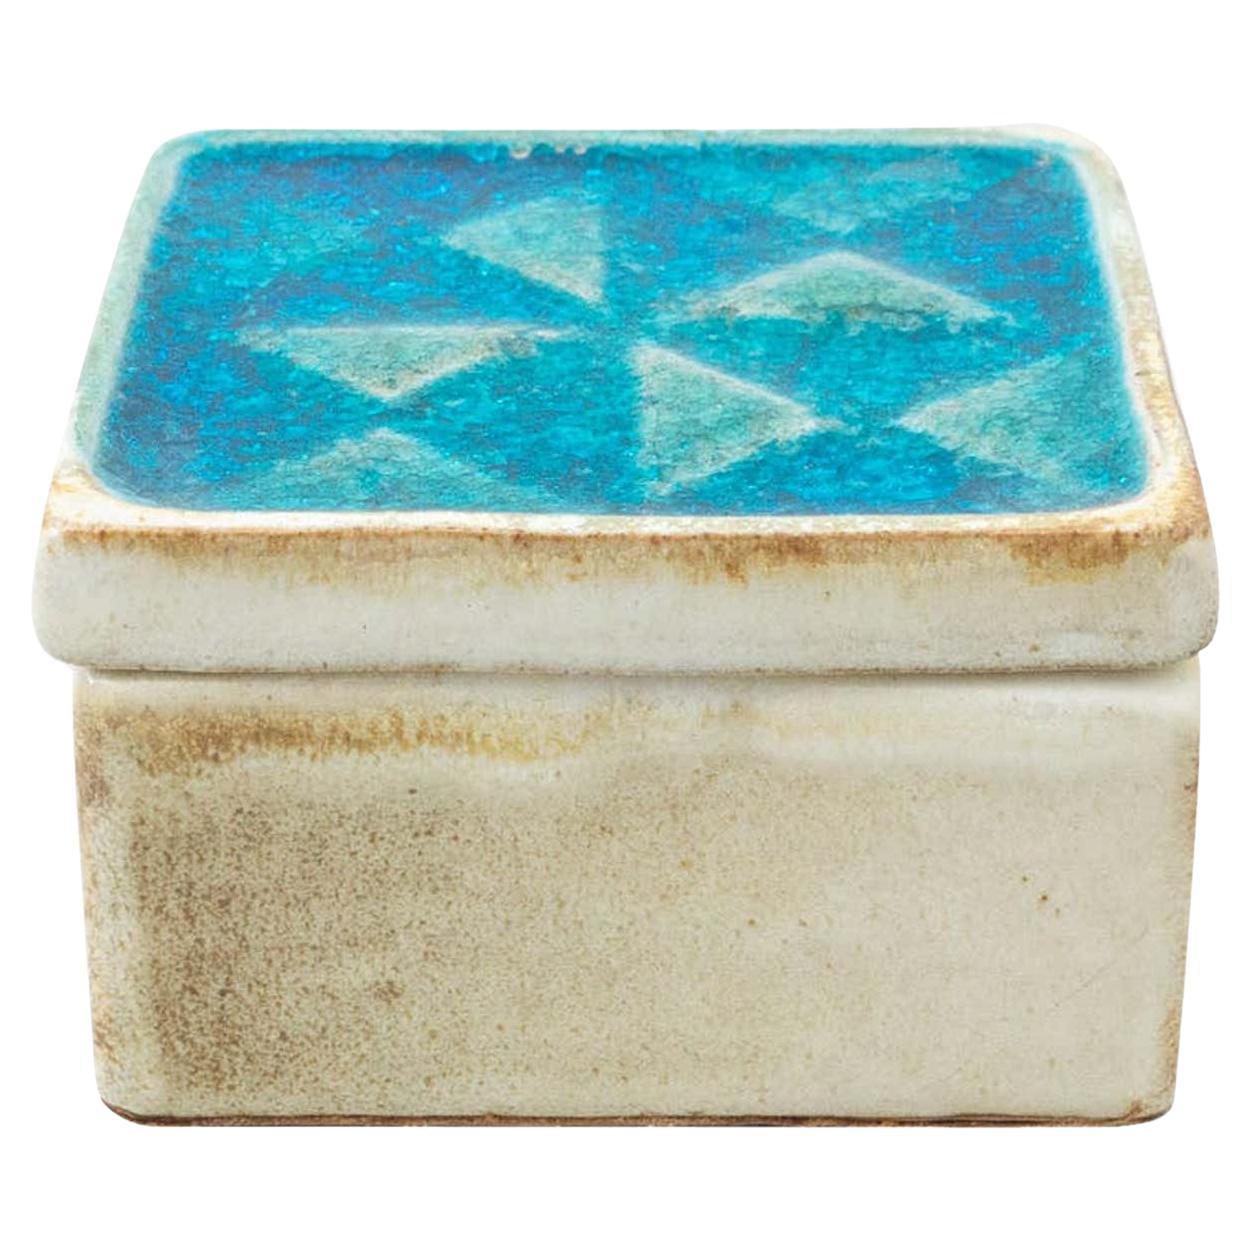 Vintage Blue Glazed Ceramic Box Handsigned by Cases, circa 1960